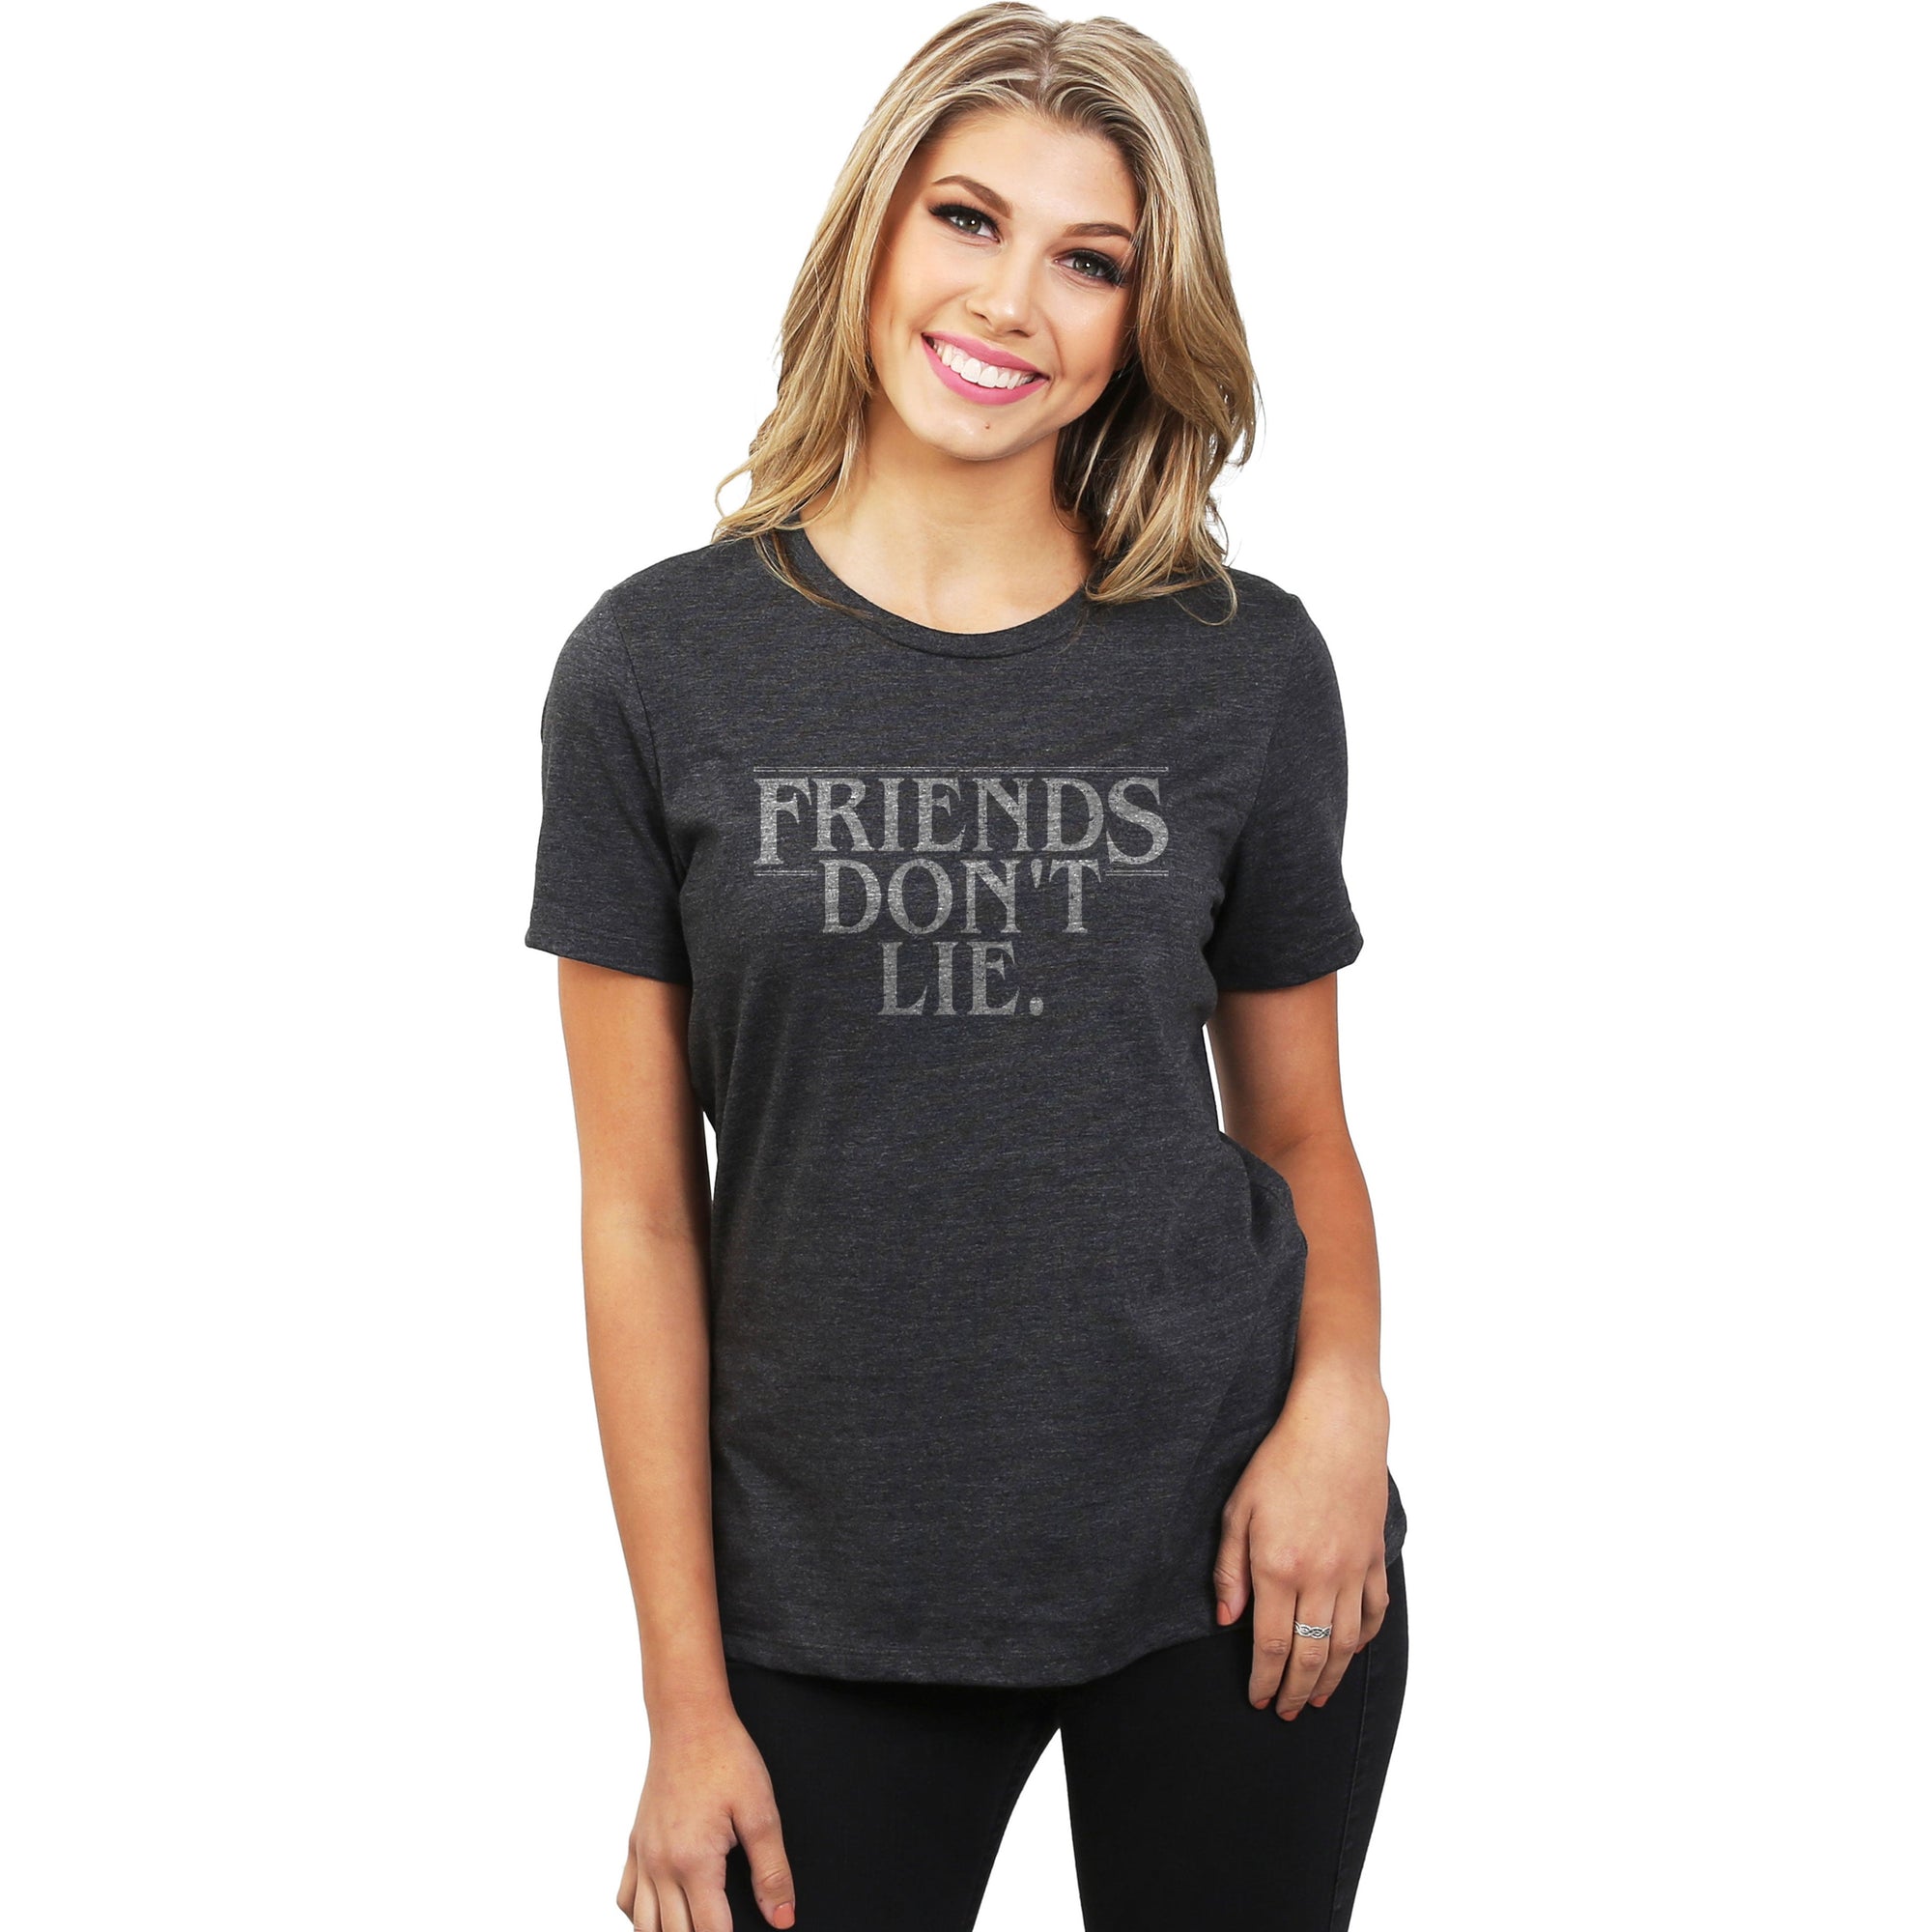 Friends Dont Lie Women's Relaxed Crewneck T-Shirt Top Tee Charcoal Model Image